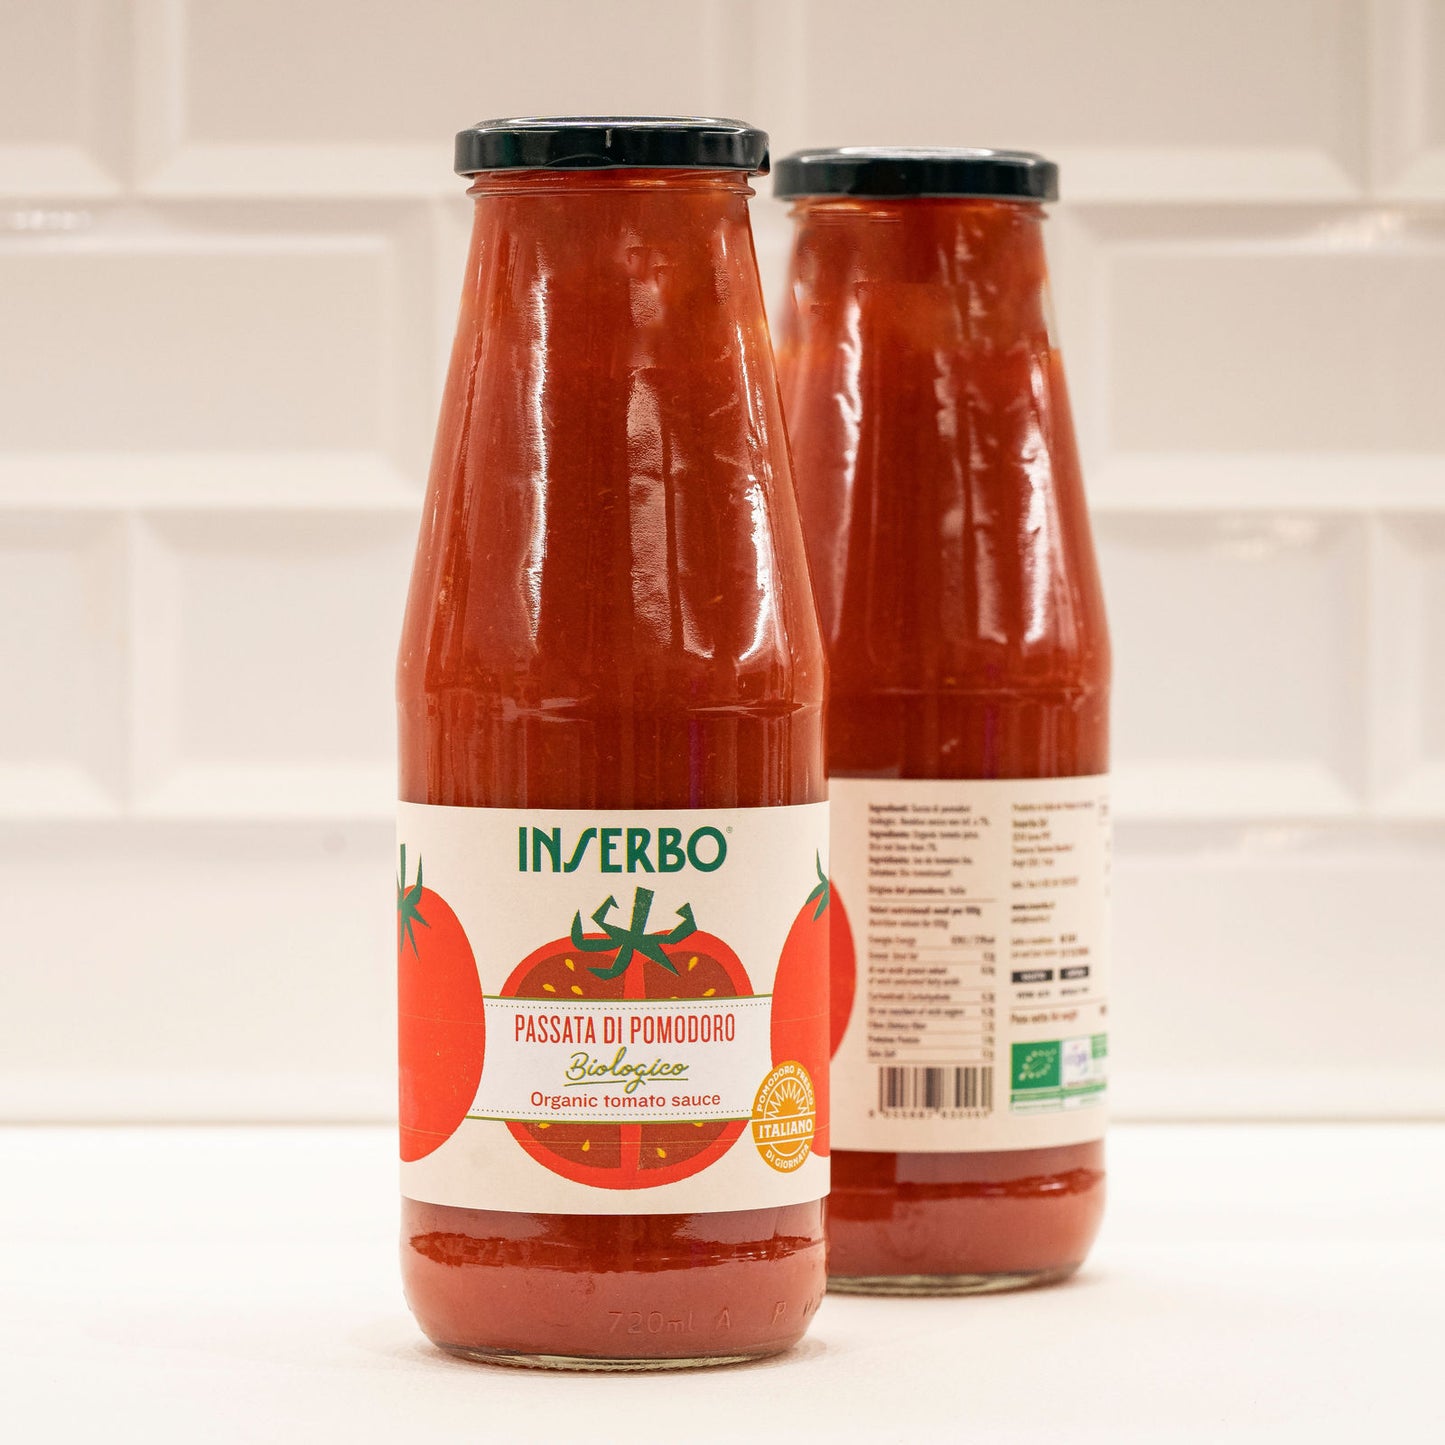 Organic tomato puree